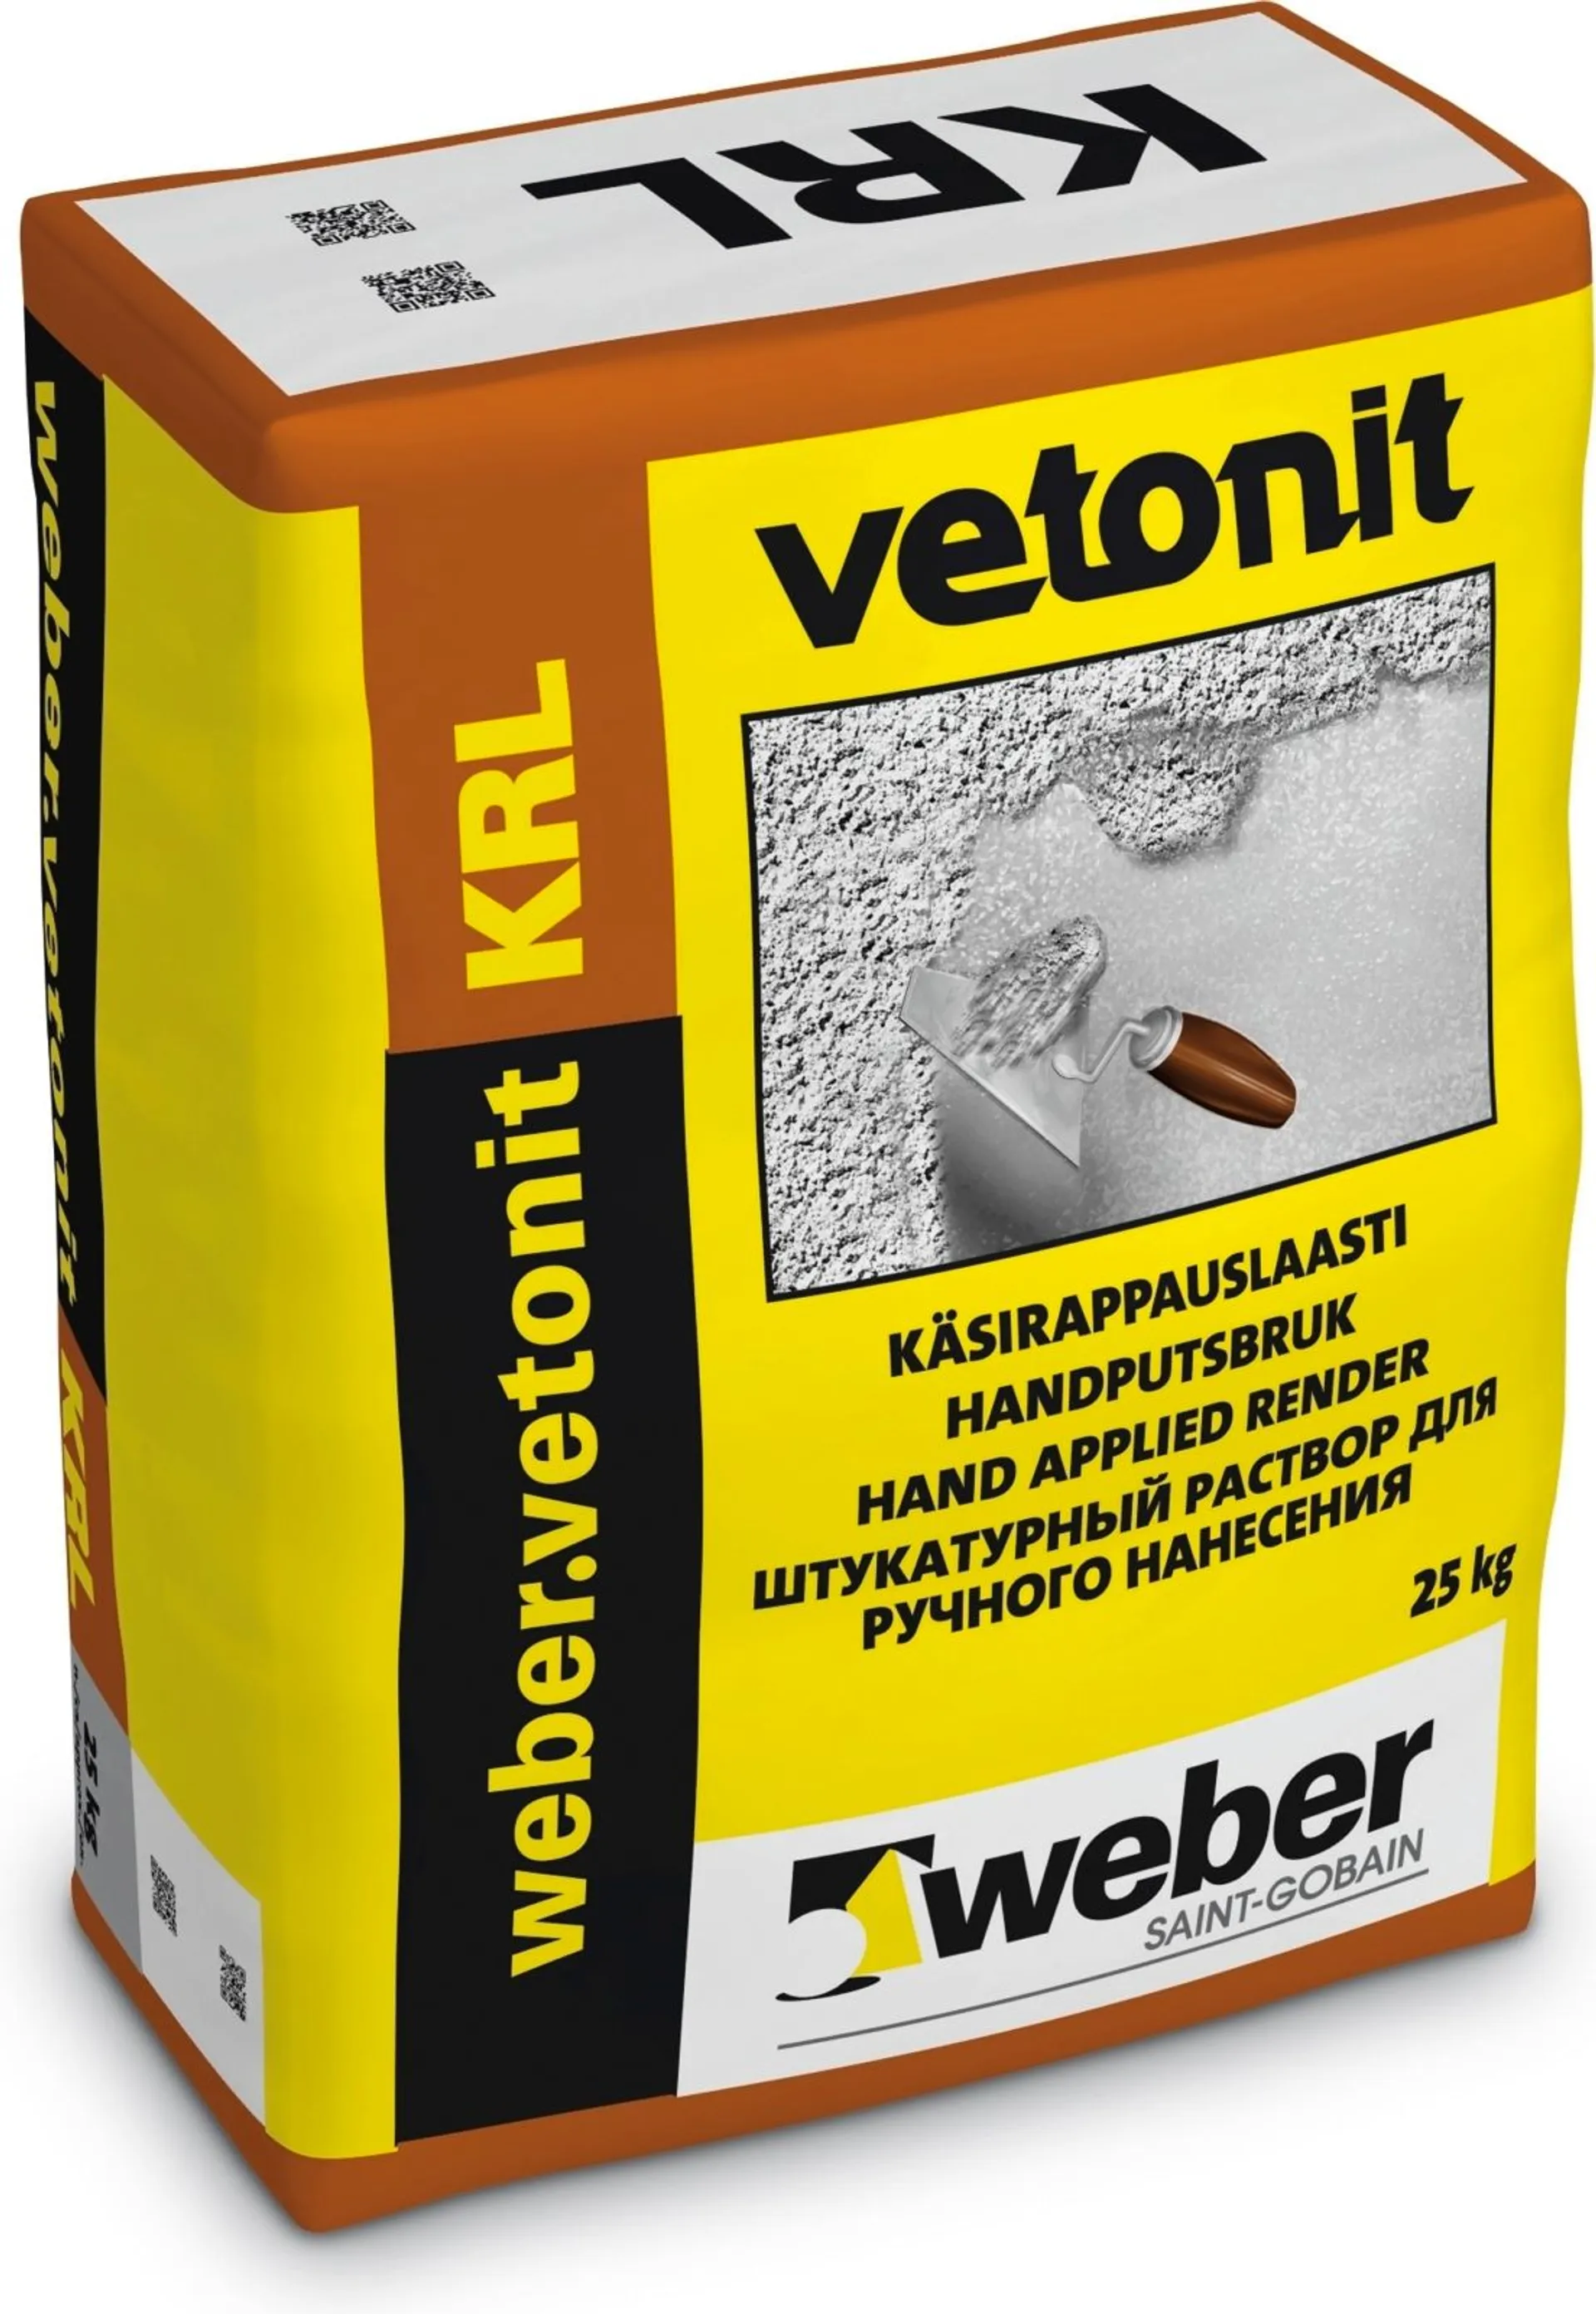 Weber Vetonit KRL 4.0 Käsirappauslaasti täyttö 25 kg